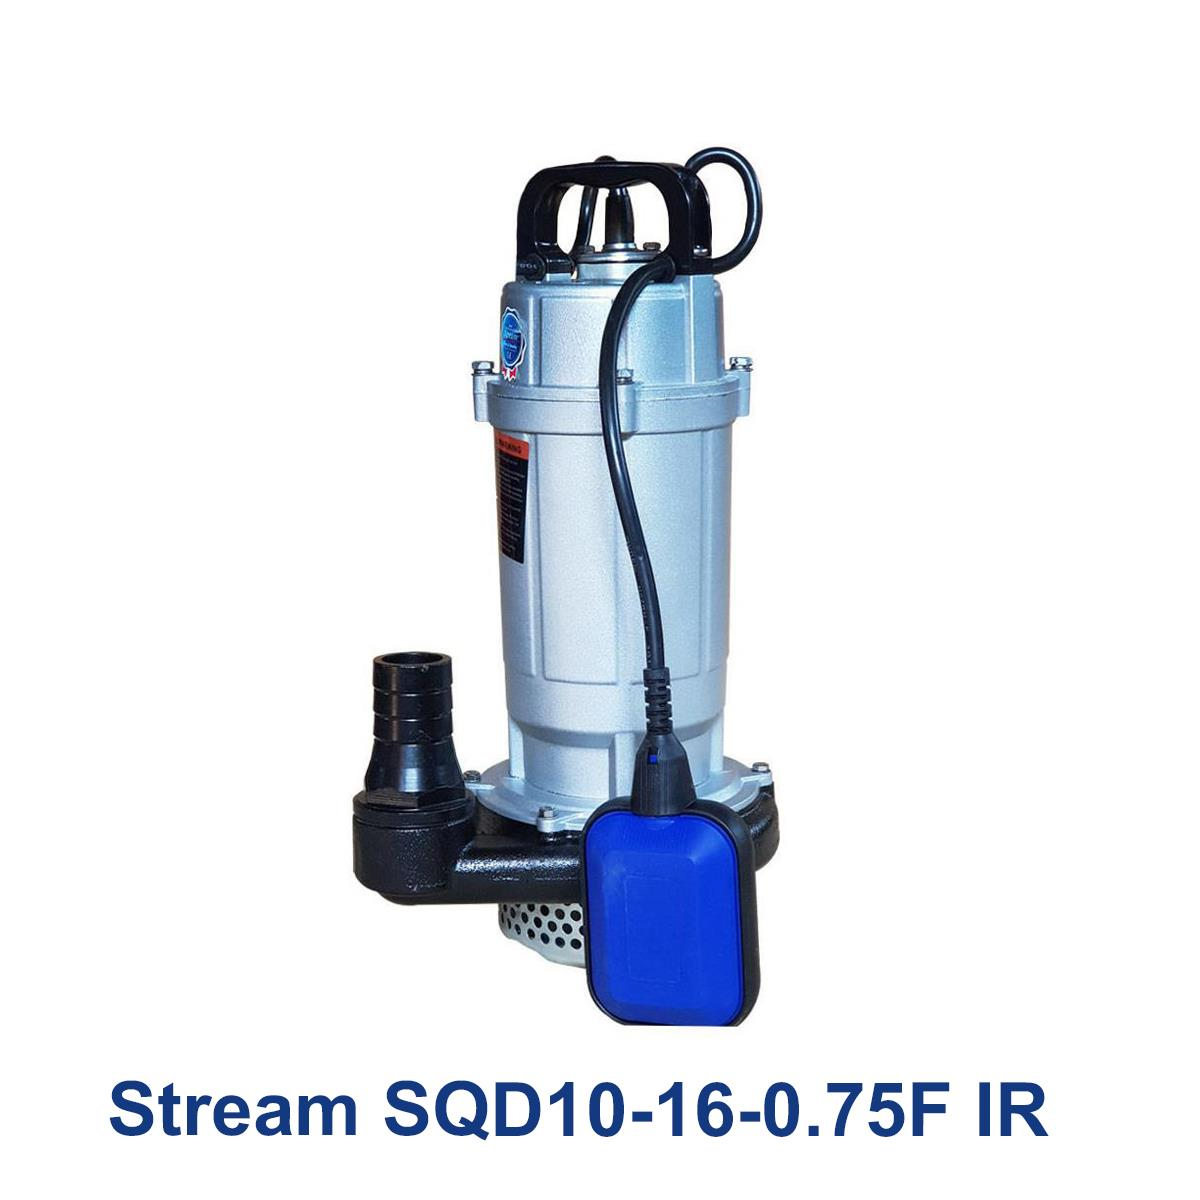 Stream-SQD10-16-0.75F-IR